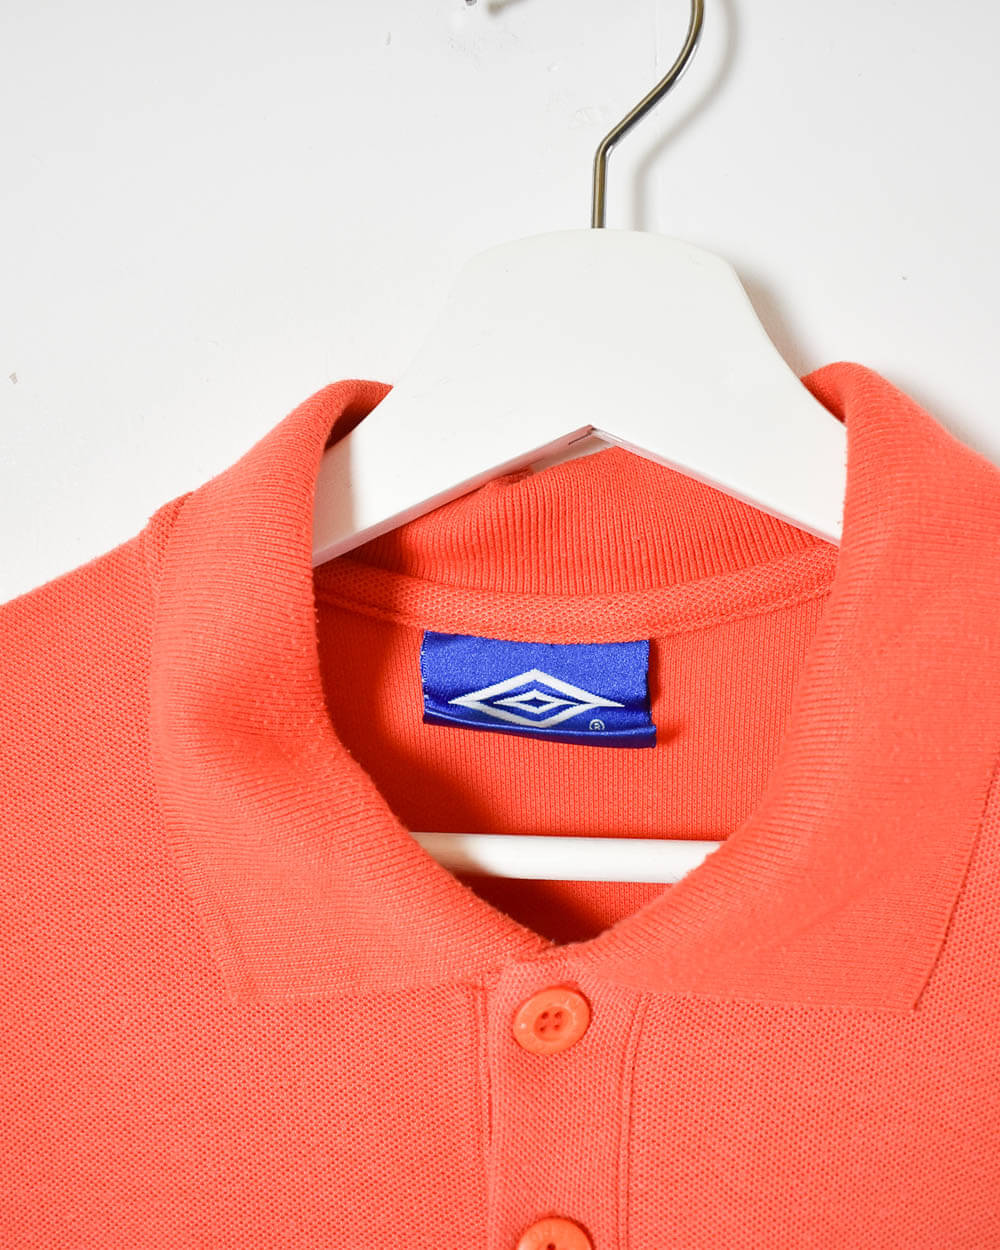 Orange Umbro Polo Shirt - Medium